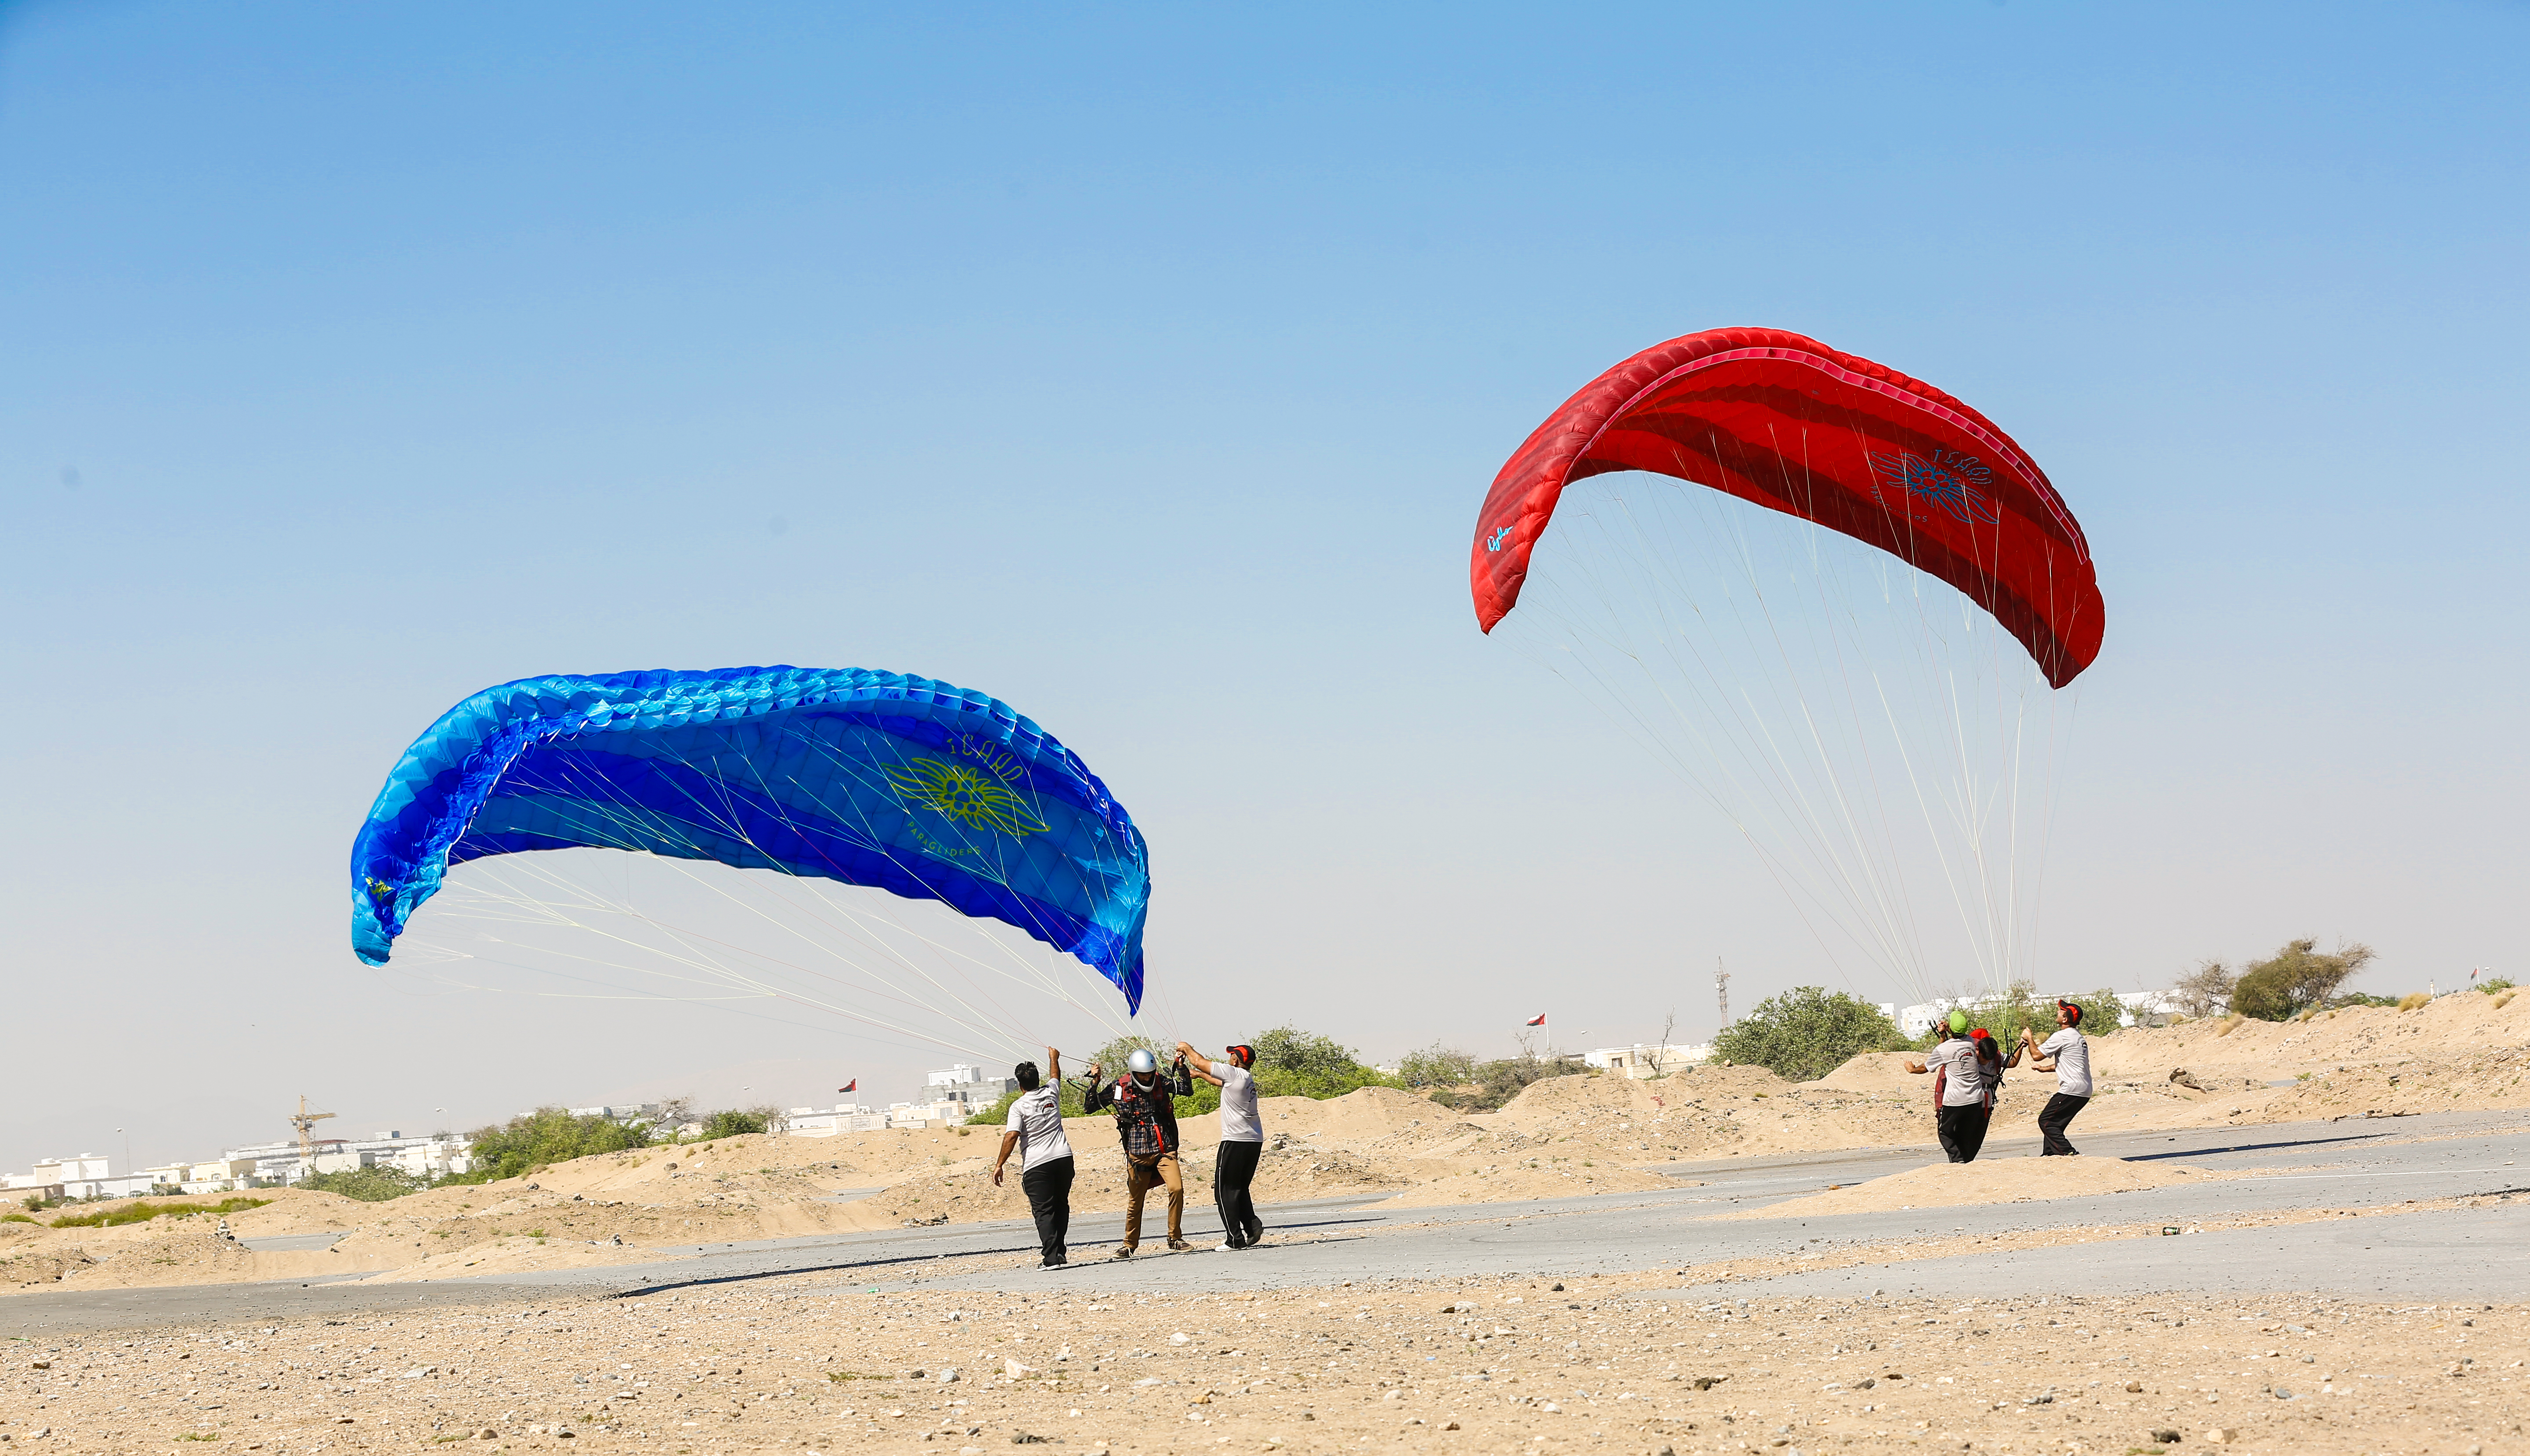 Paragliding and paramotoring introduced in Oman